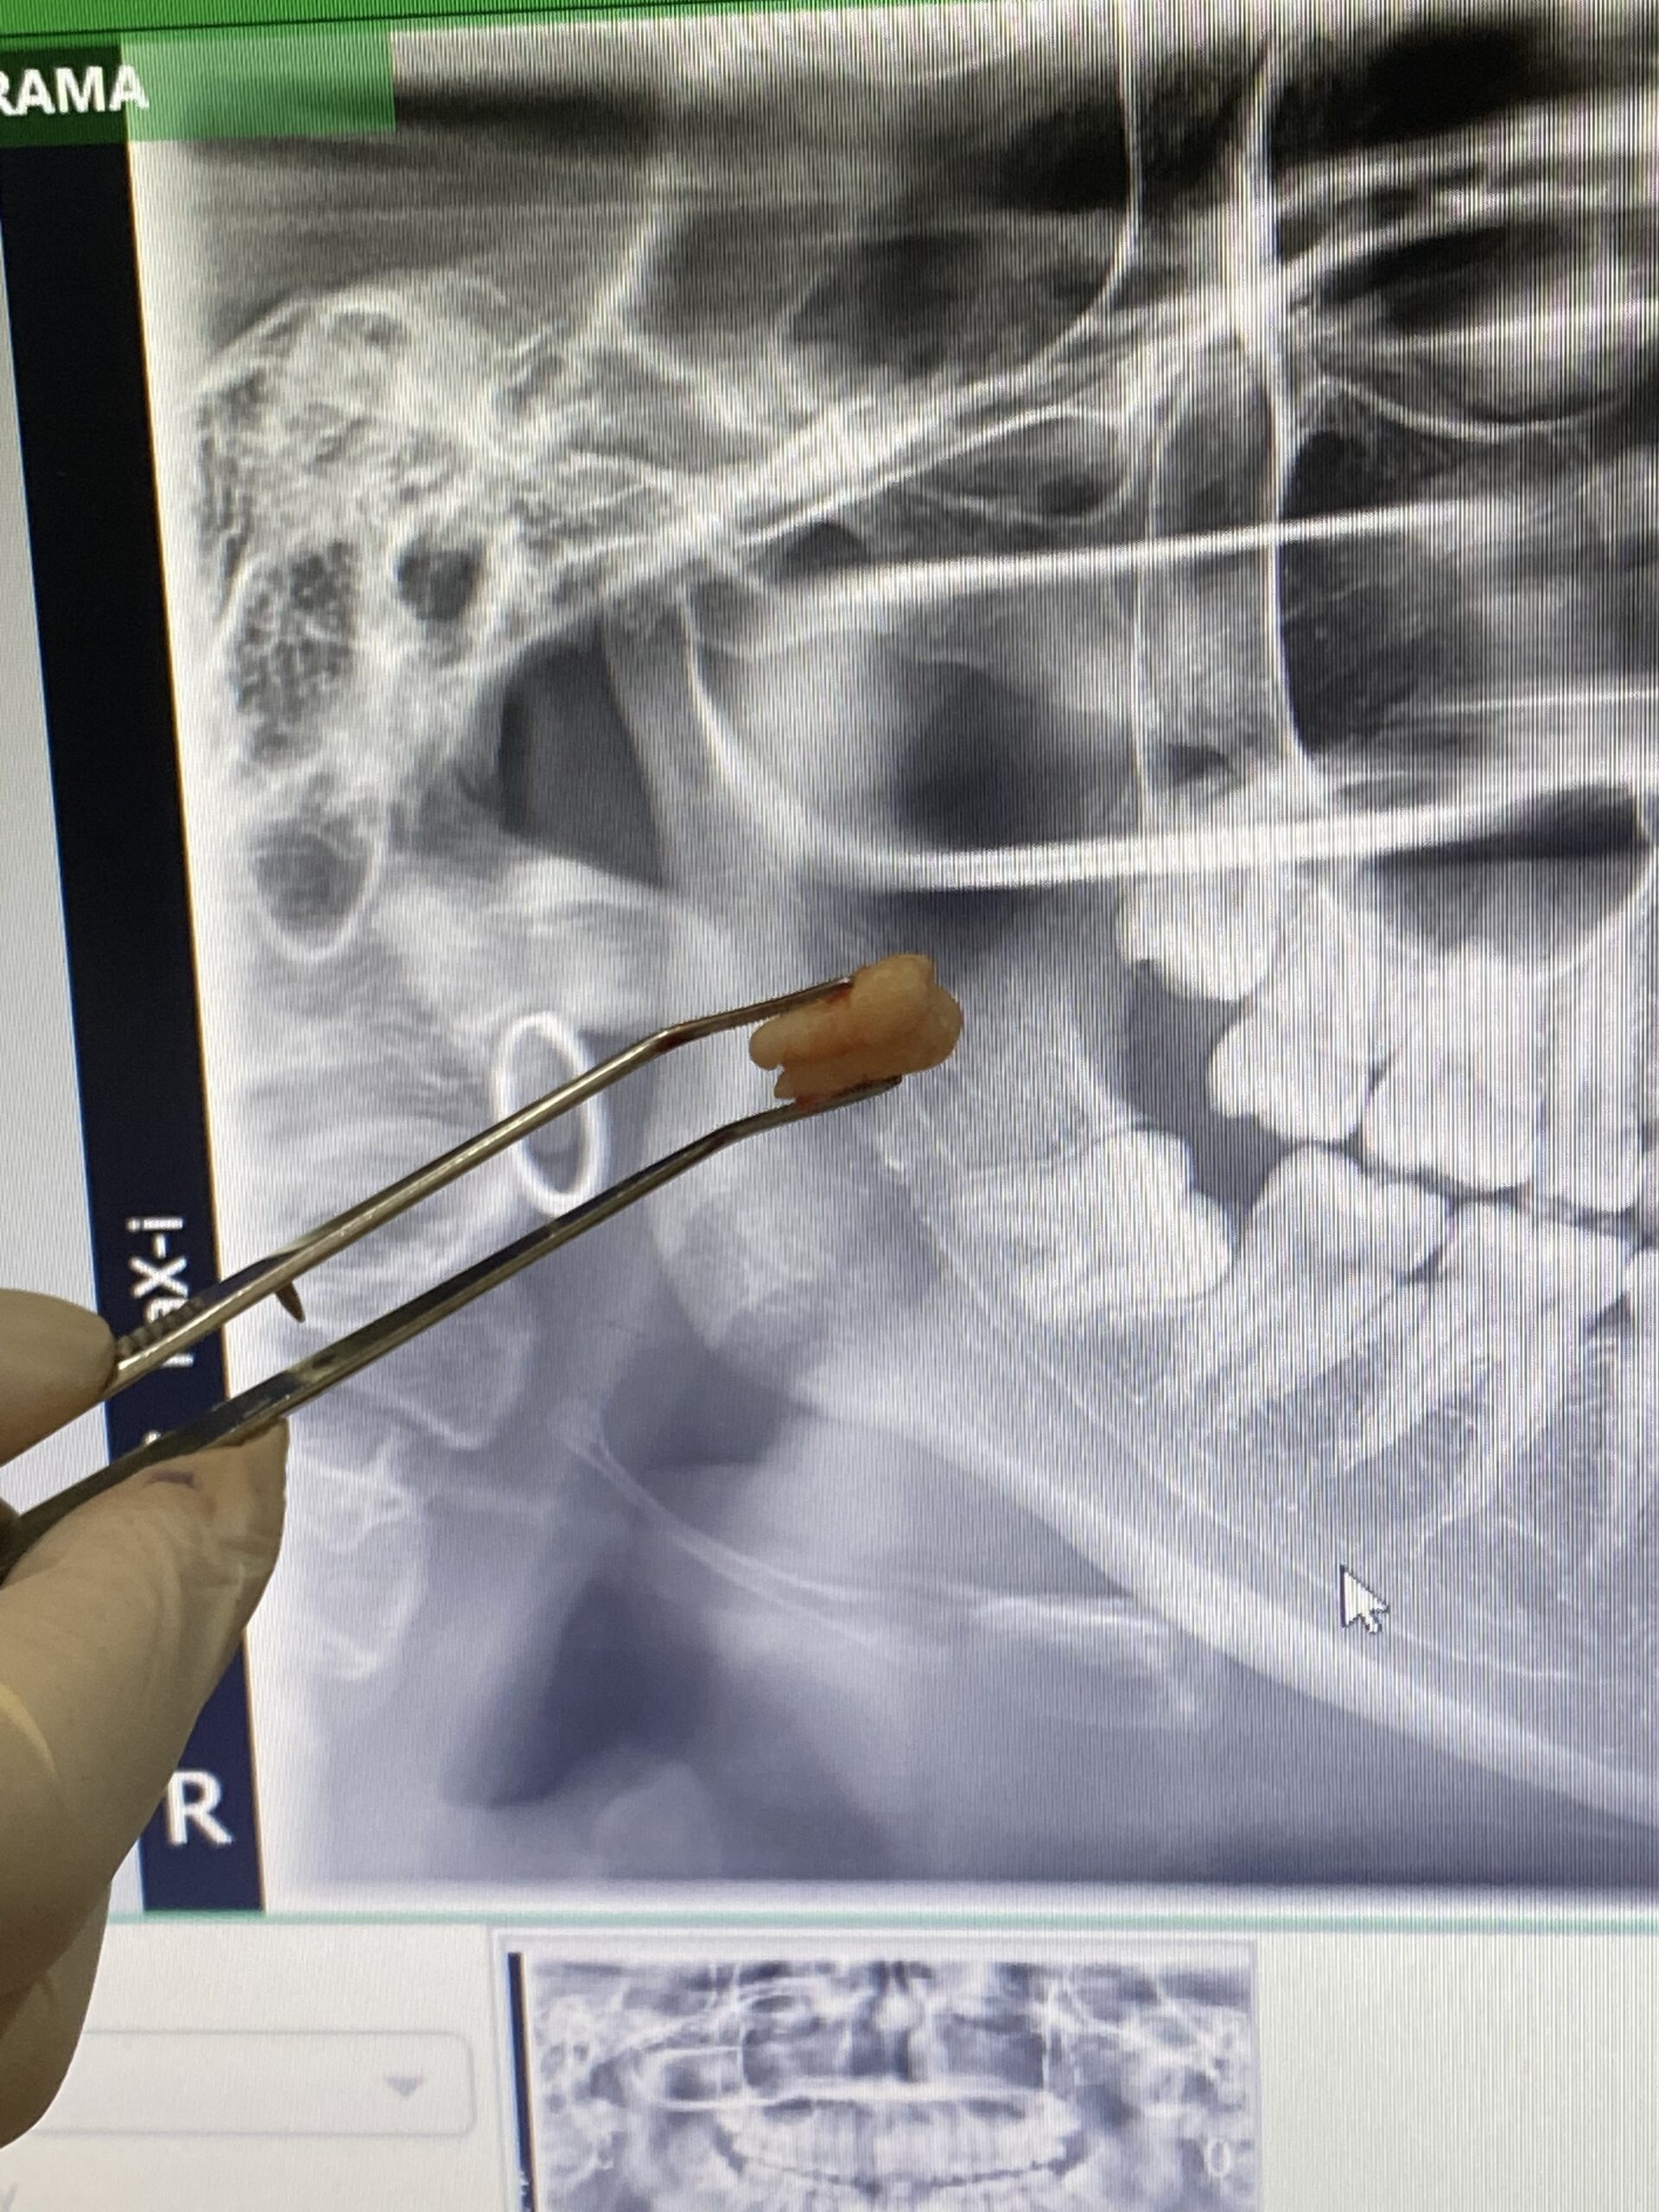 Hasil rontgen gigi bungsu yang tumbuh miring terpendam